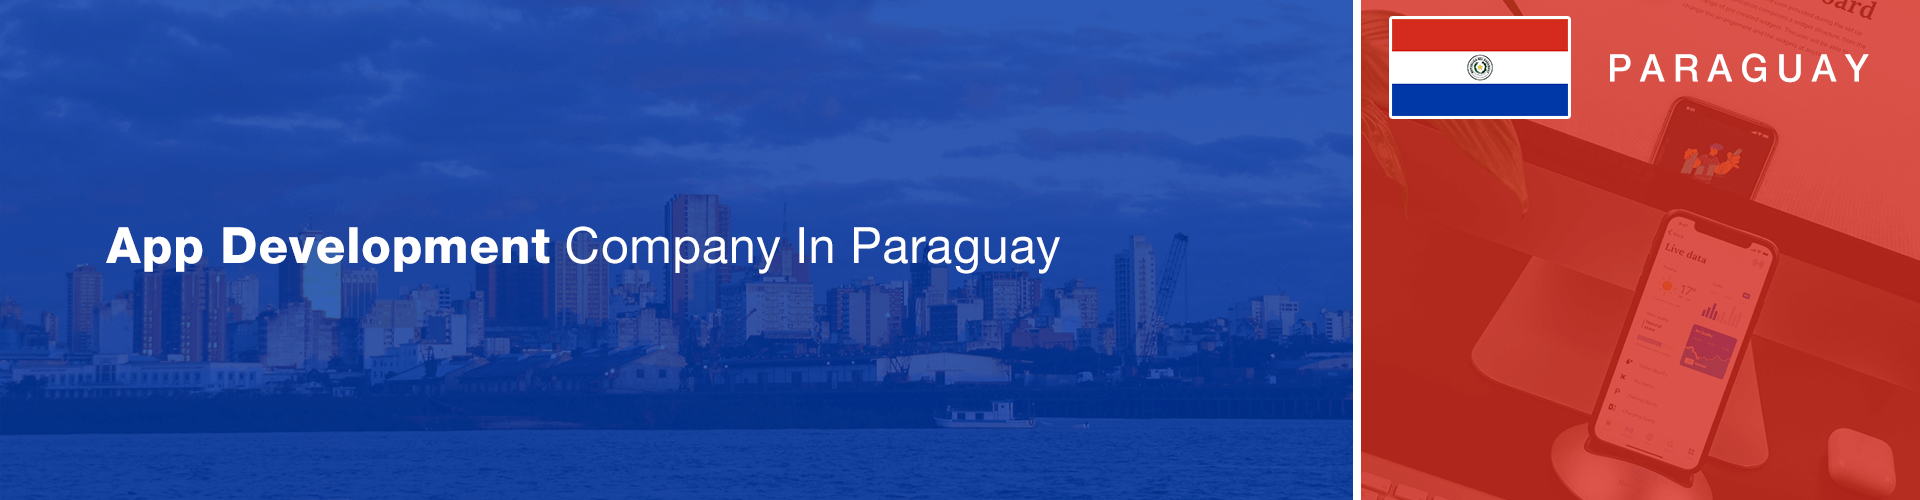 mobile app development paraguay